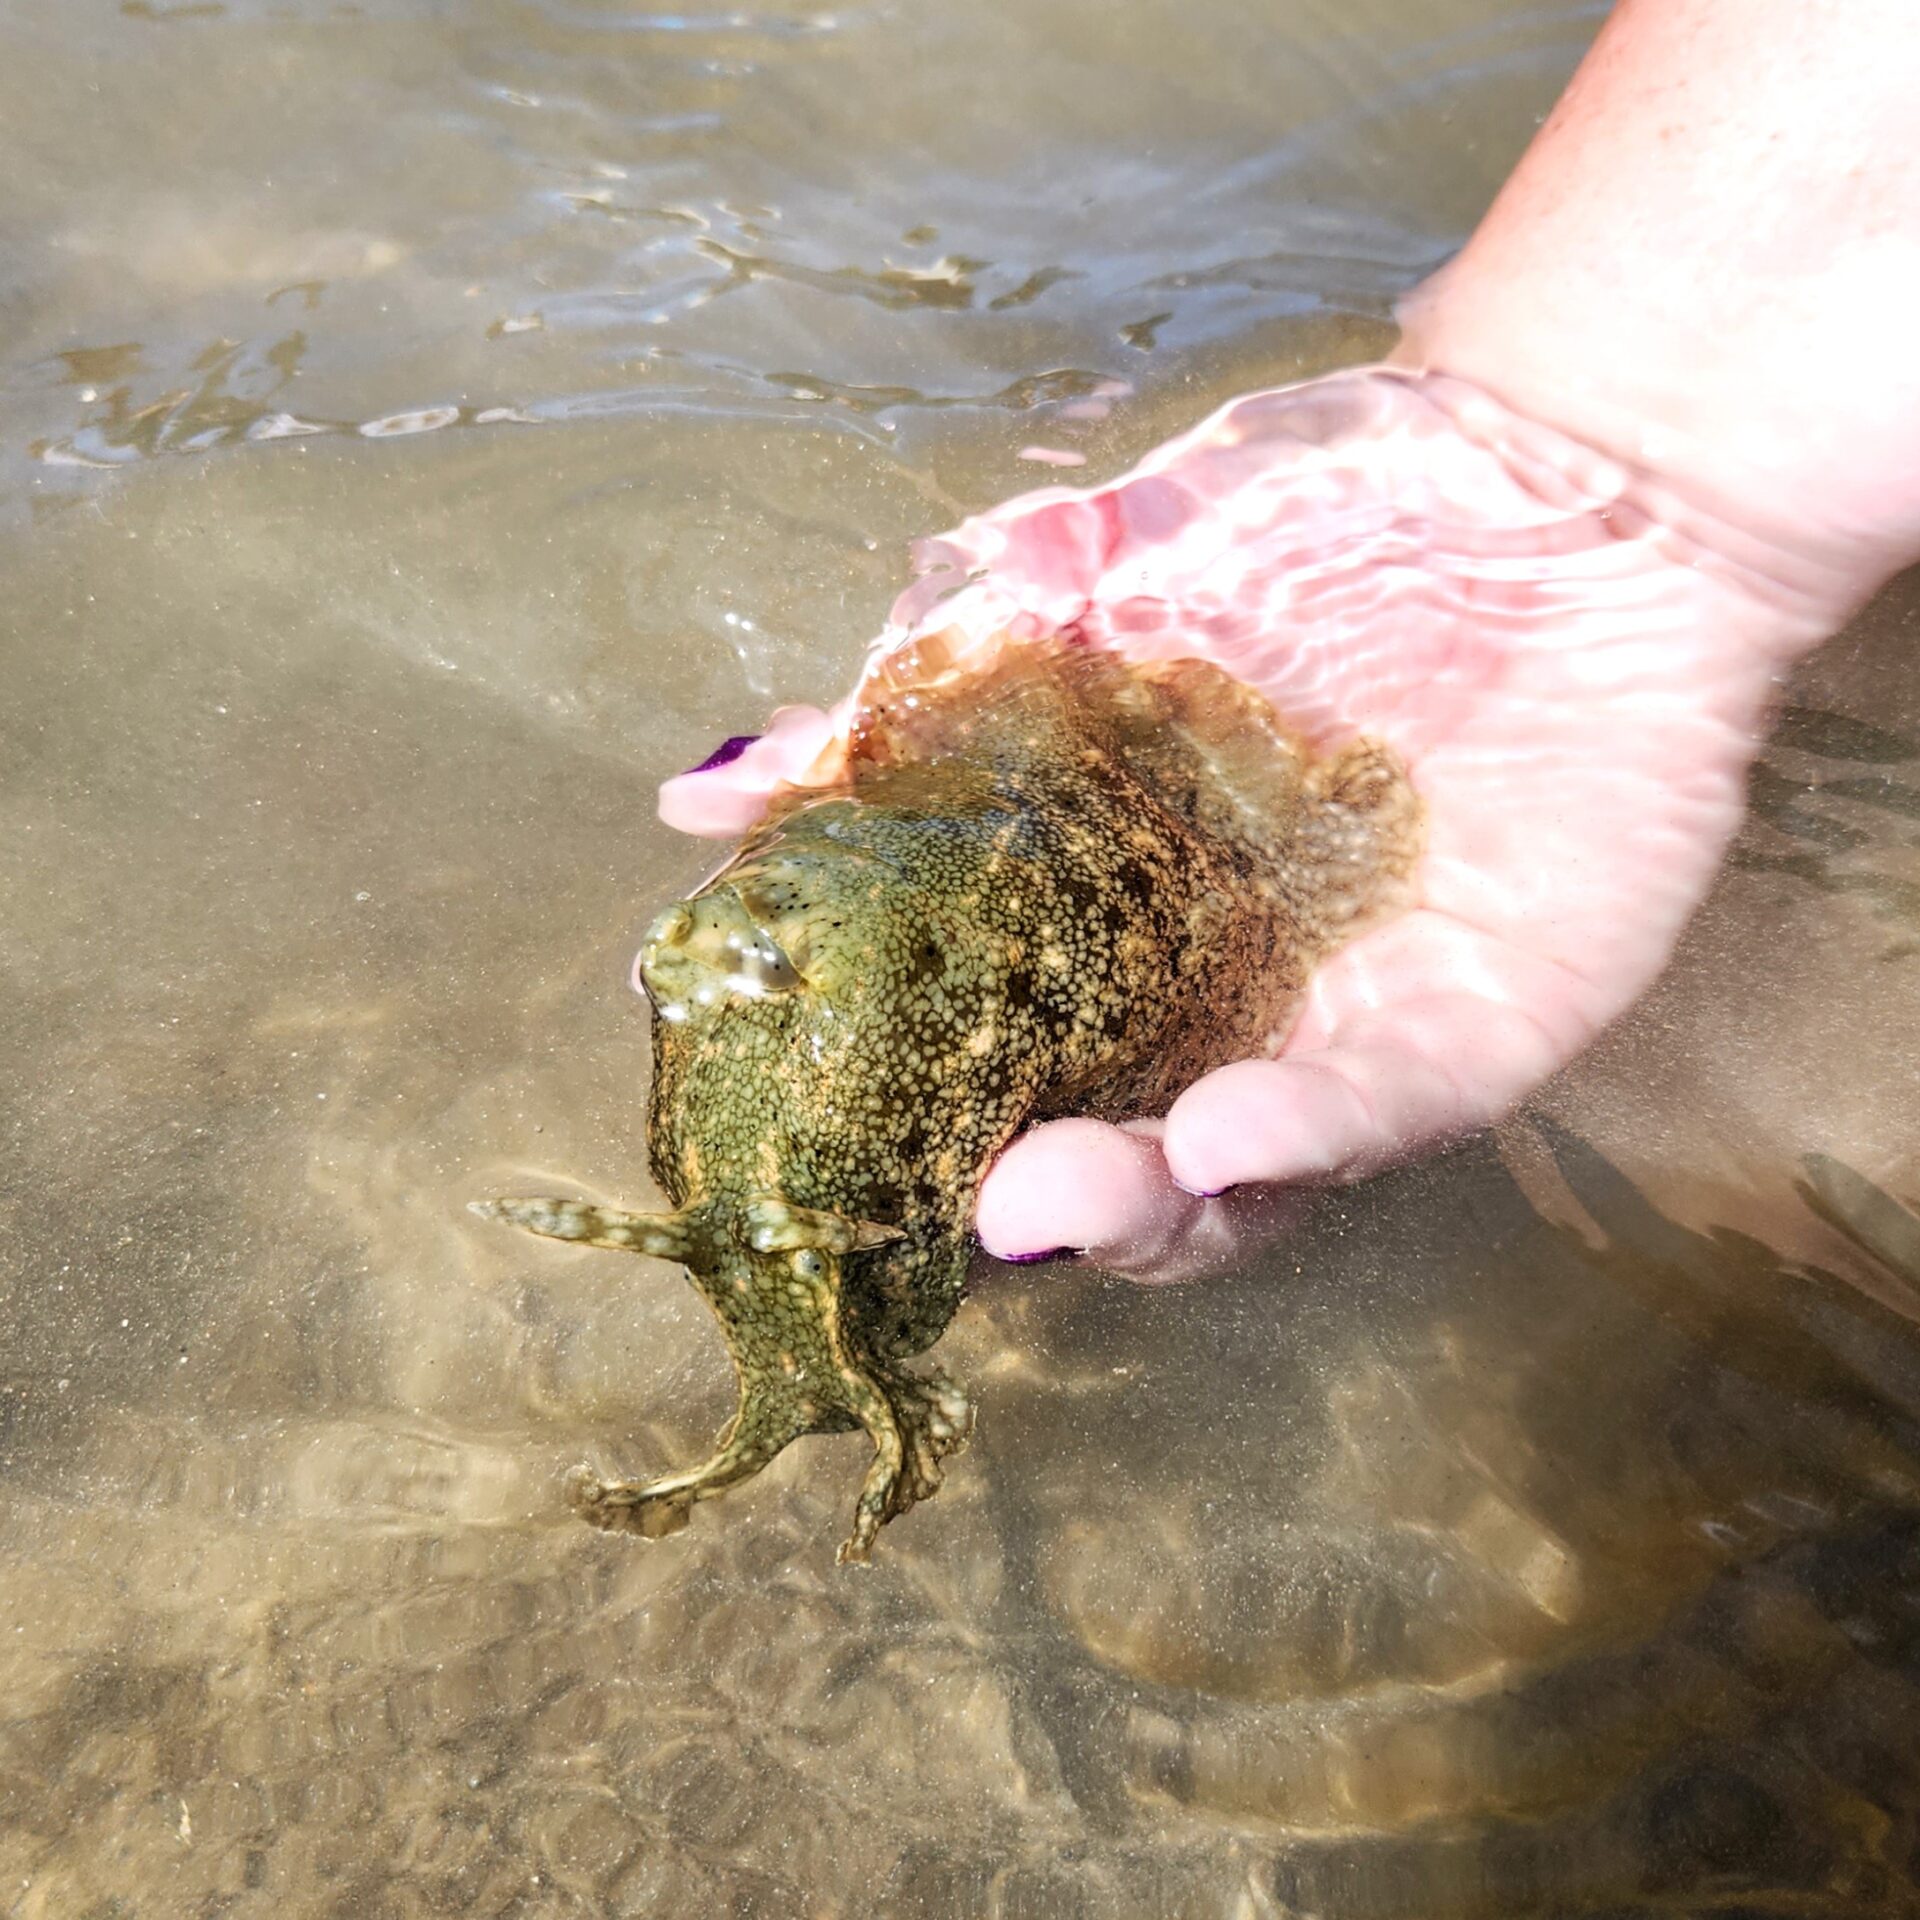 Sea hare found during Nudi Wear's removal of invasive algae in Hawaii